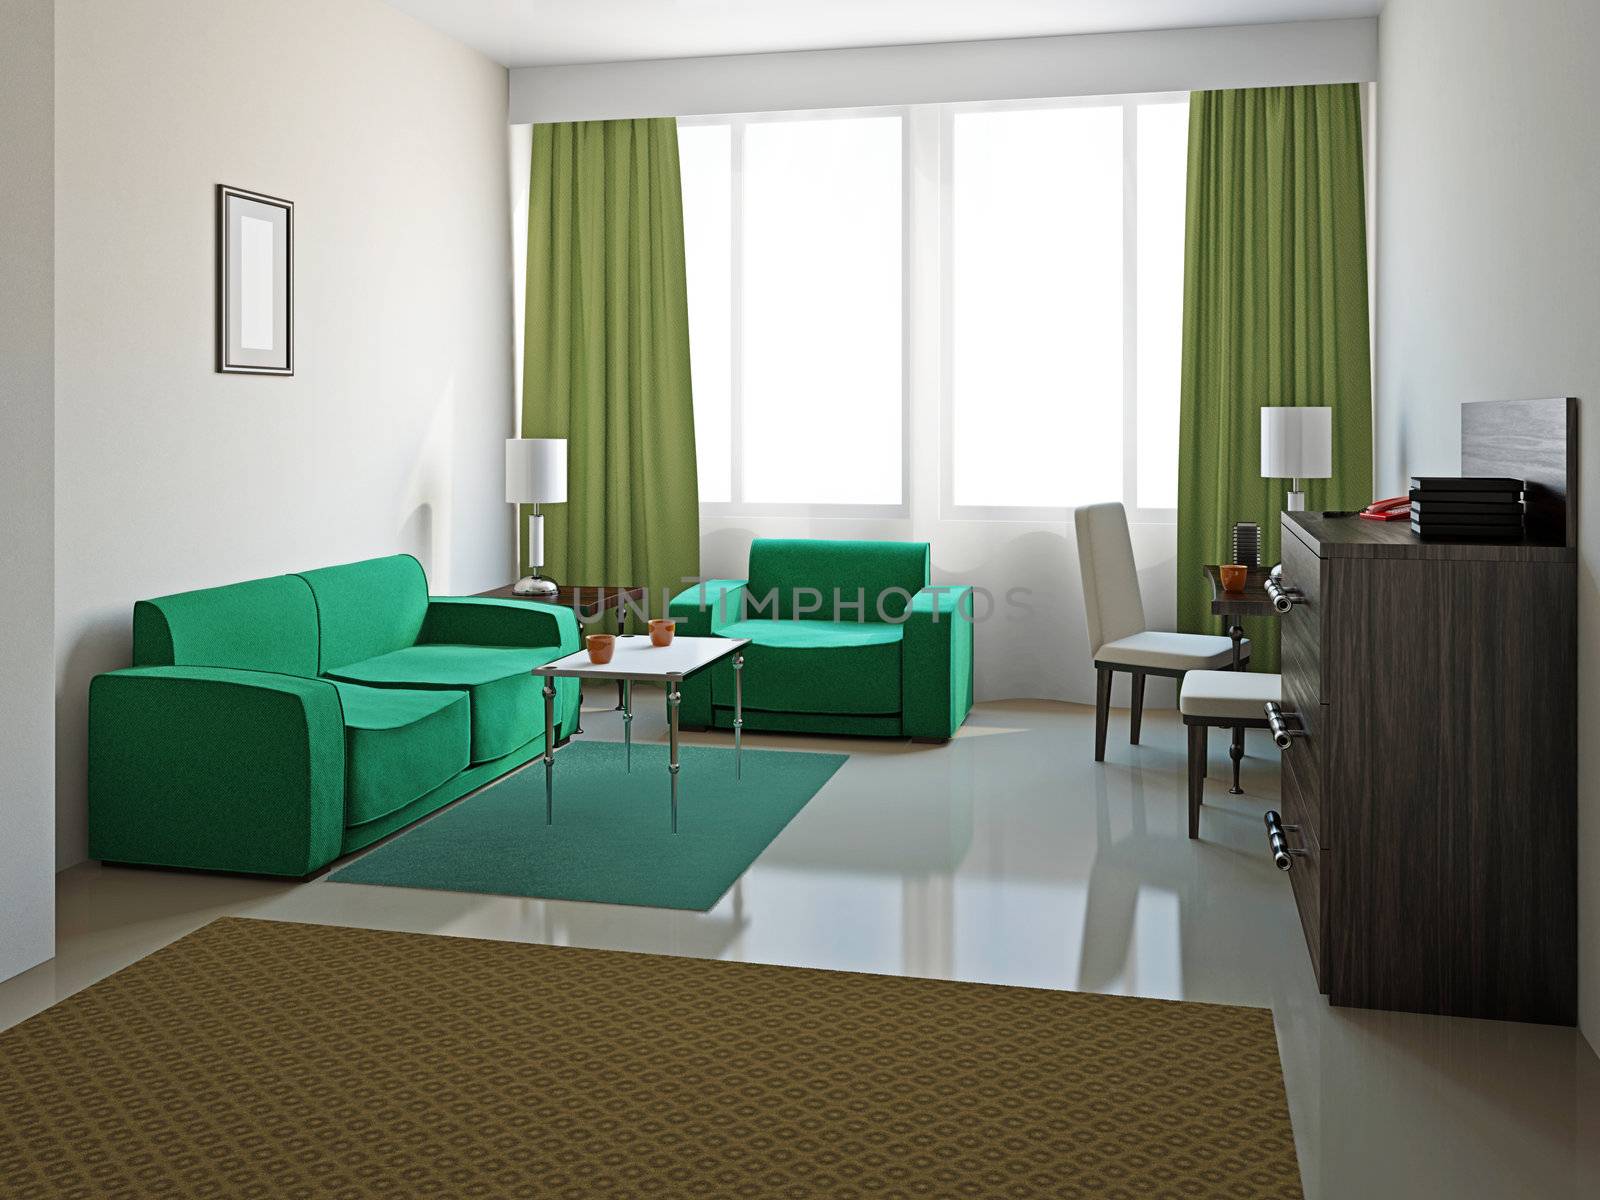 Livingroom with furniture  near the big window